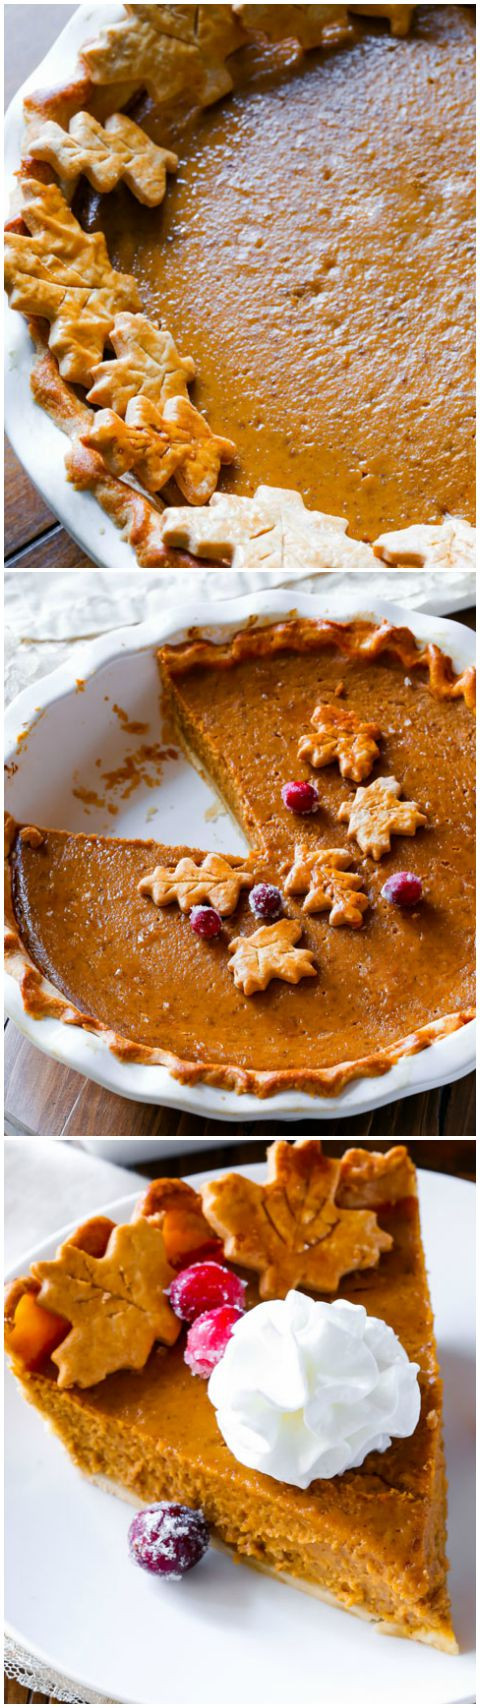 Good Fall Desserts
 The Great Pumpkin Pie Recipe Sallys Baking Addiction